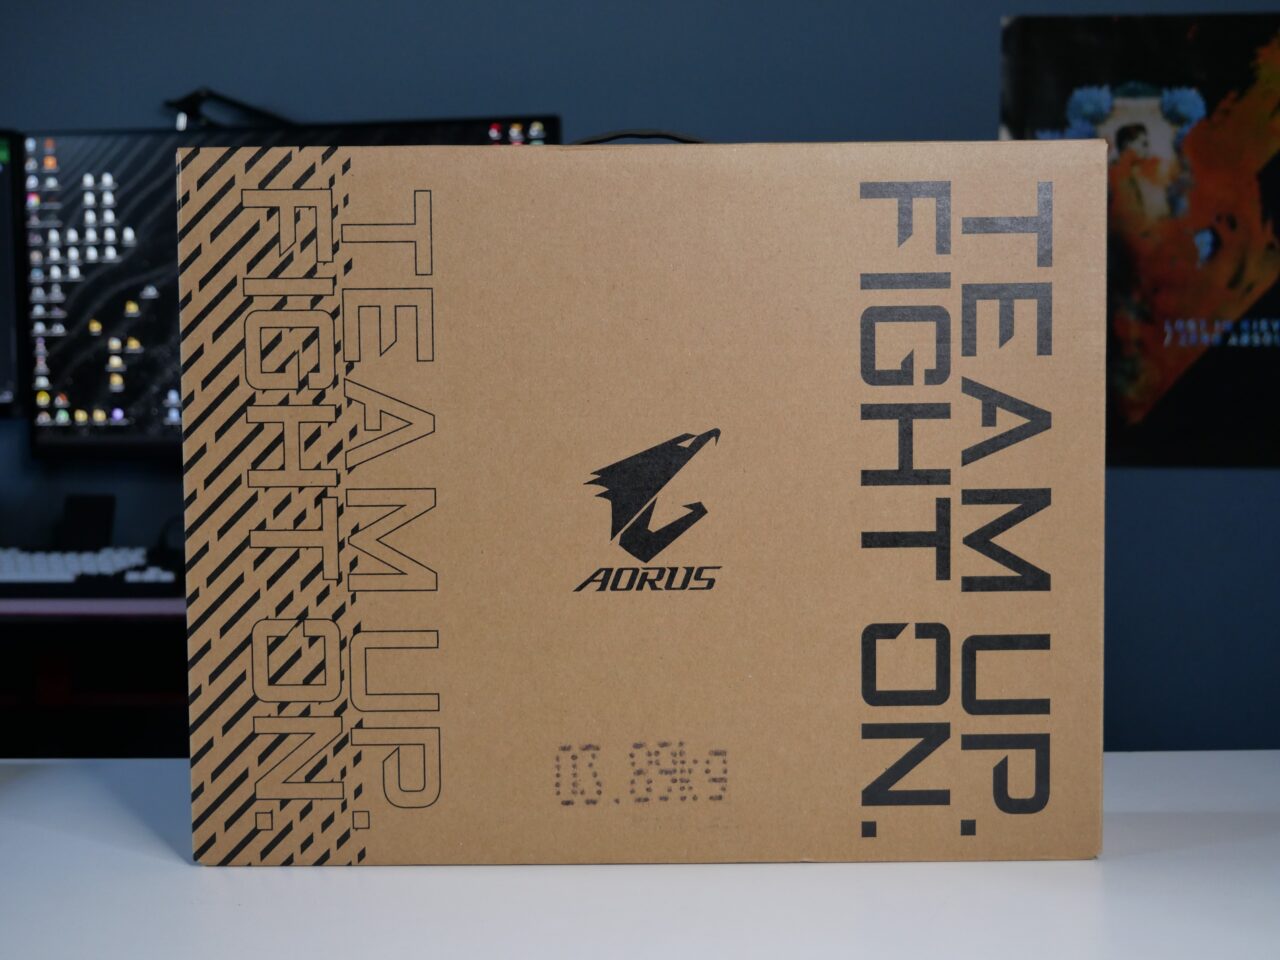 Brązowe pudełko z napisem "TEAM UP. FIGHT ON." i logo AORUS.